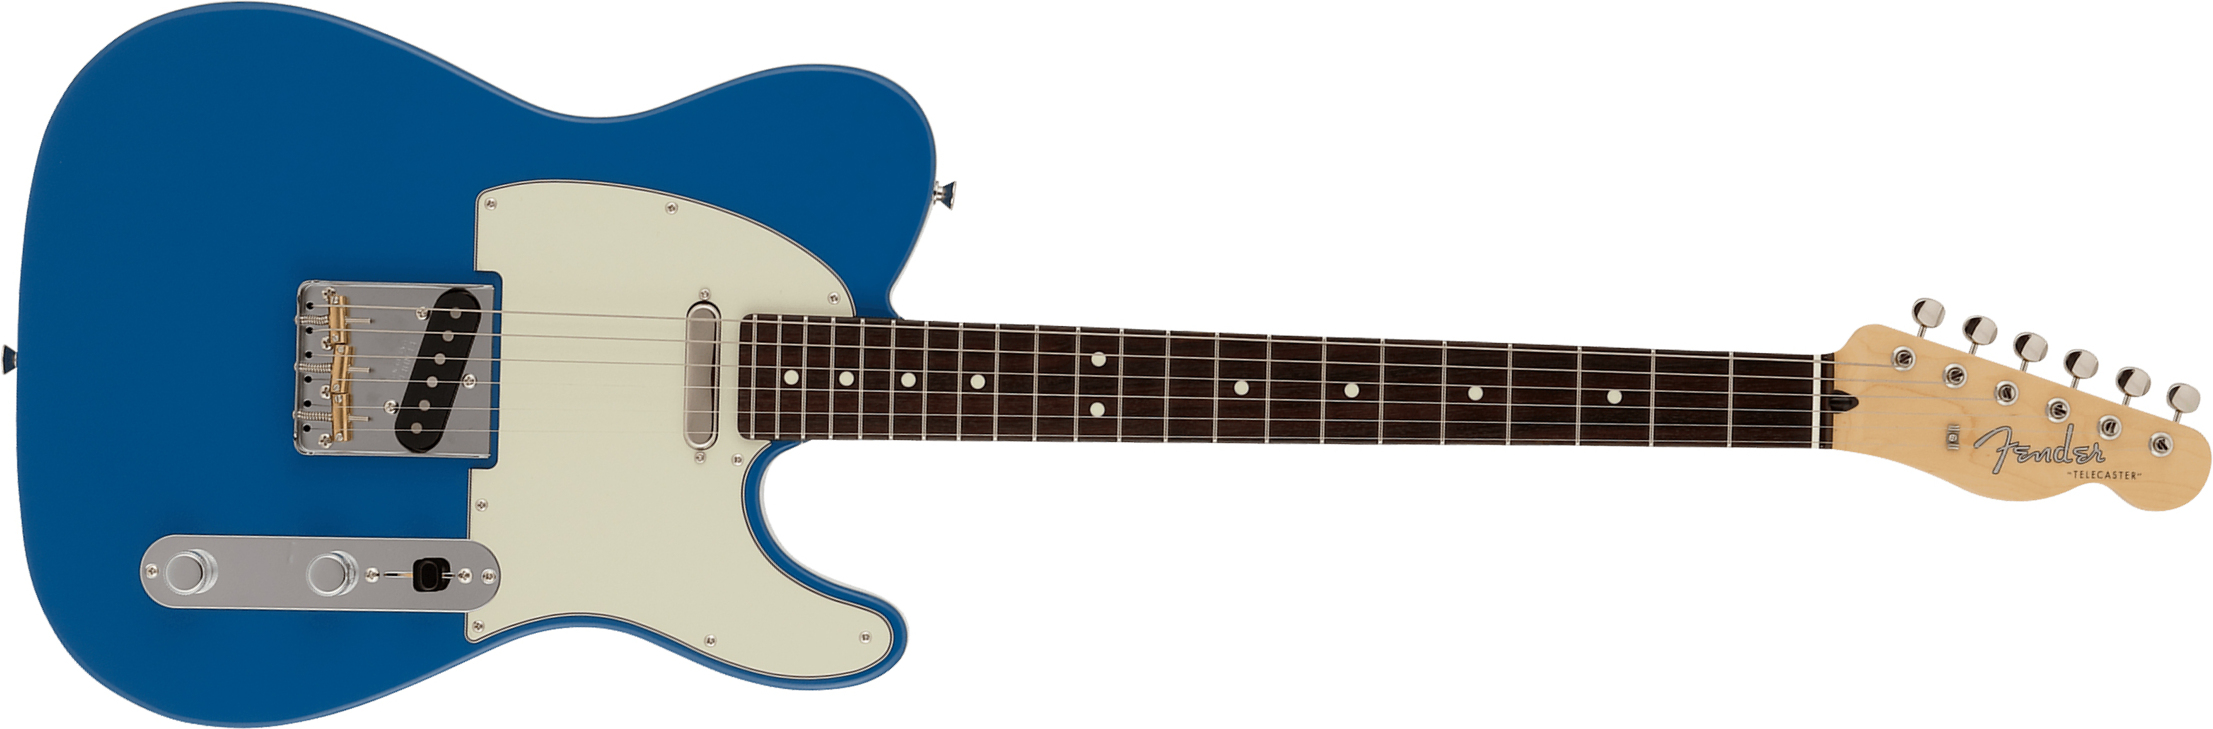 Fender Tele Hybrid Ii Jap 2s Ht Mn - Forest Blue - Guitarra eléctrica con forma de tel - Main picture